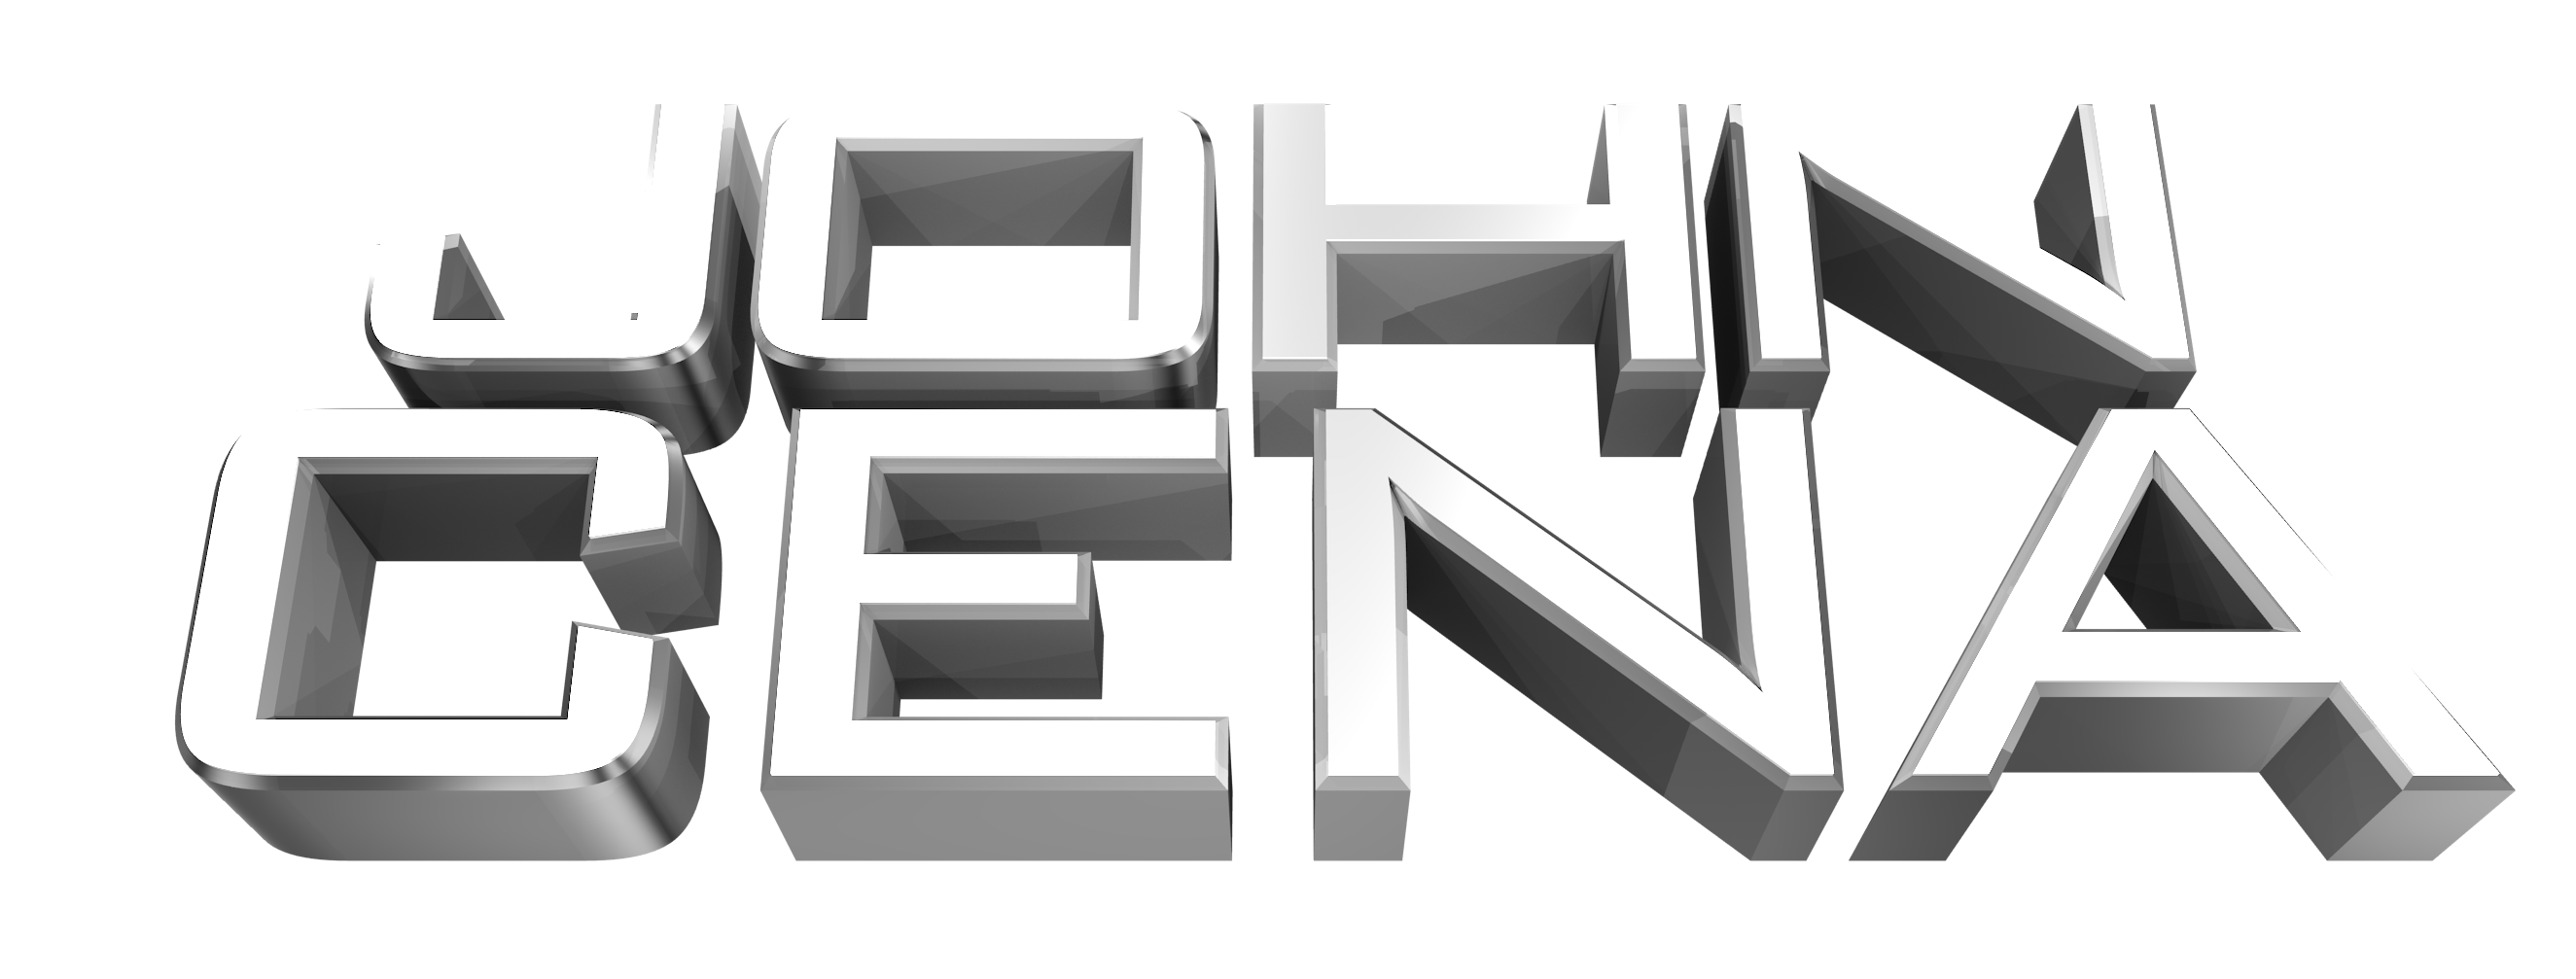 John Cena (2005) Blender Render v6 by TheRPRTNetwork on DeviantArt